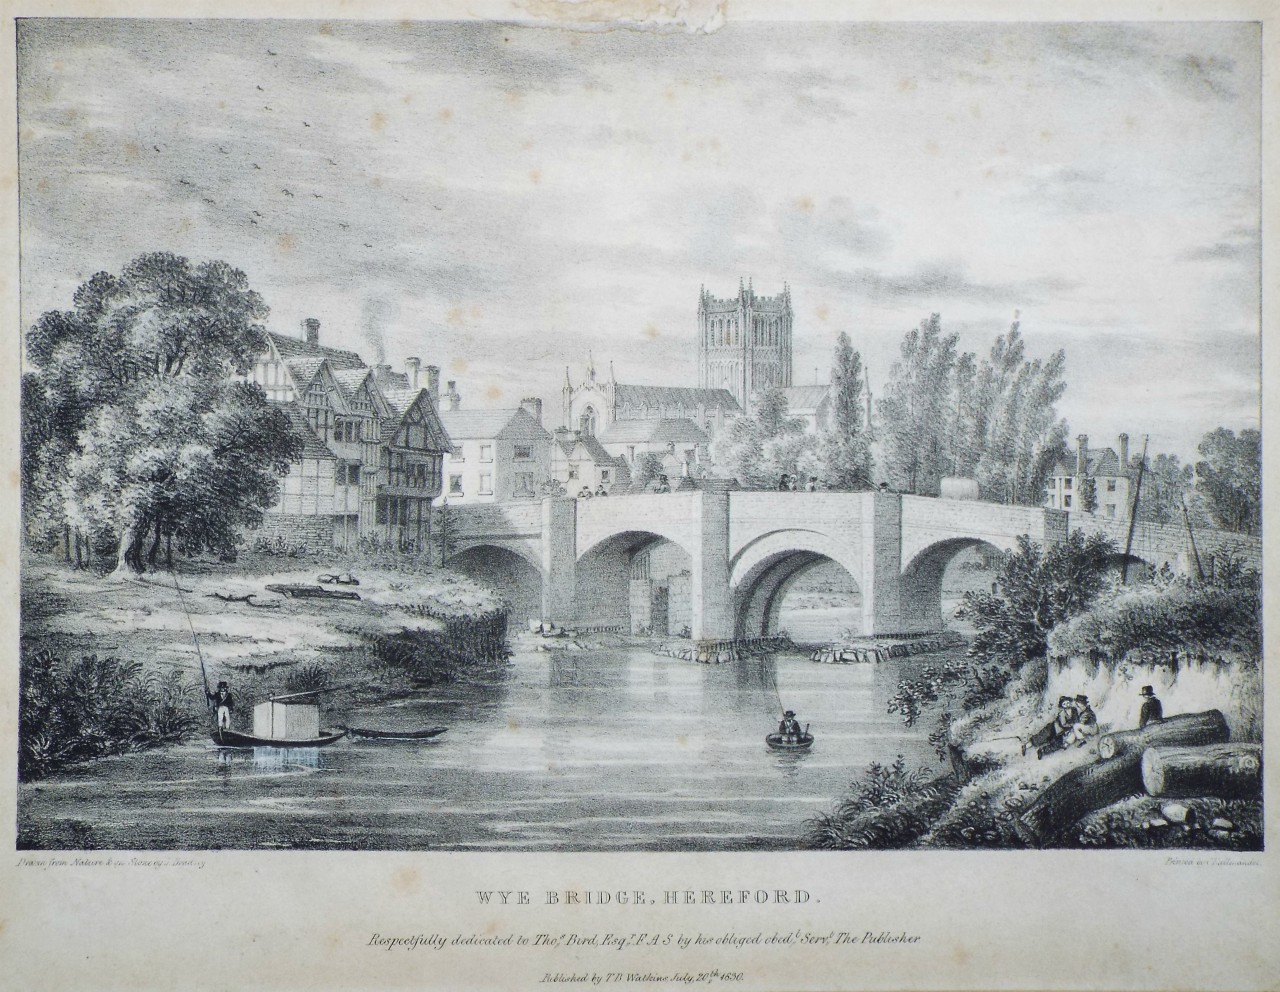 Lithograph - Wye Bridge, Hereford. - Bradley